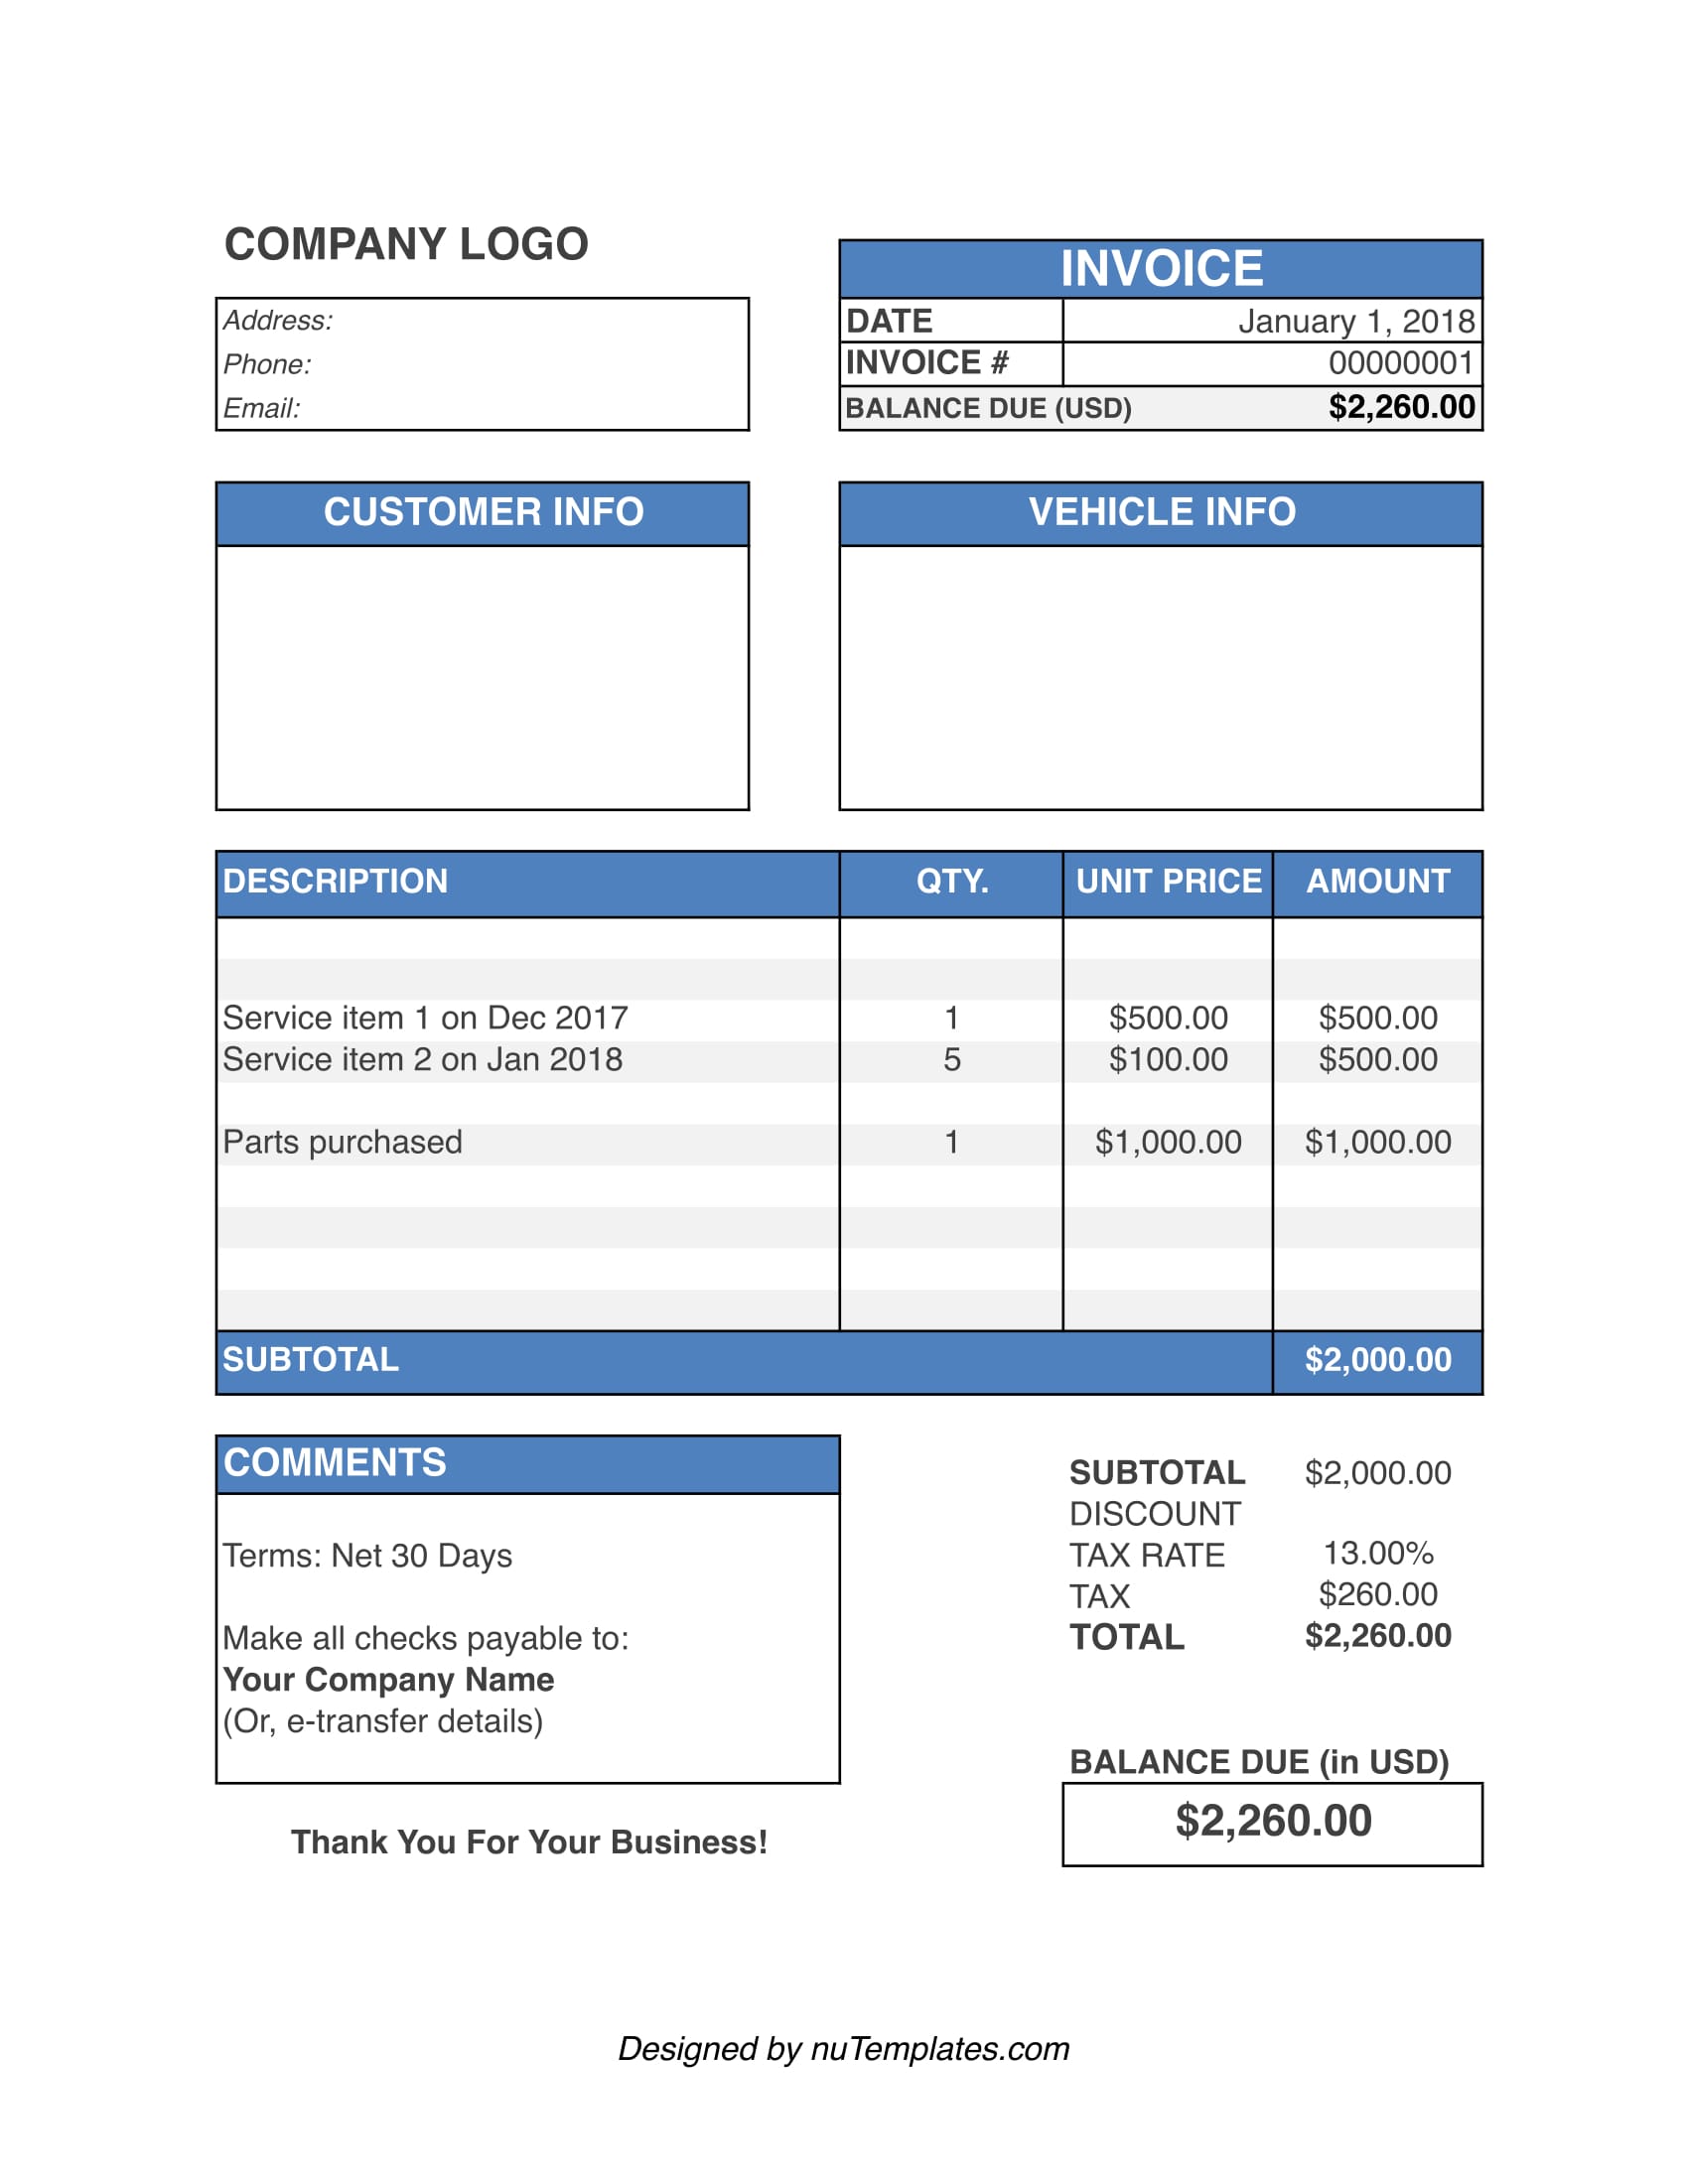 printable-mechanic-invoice-template-customize-and-print